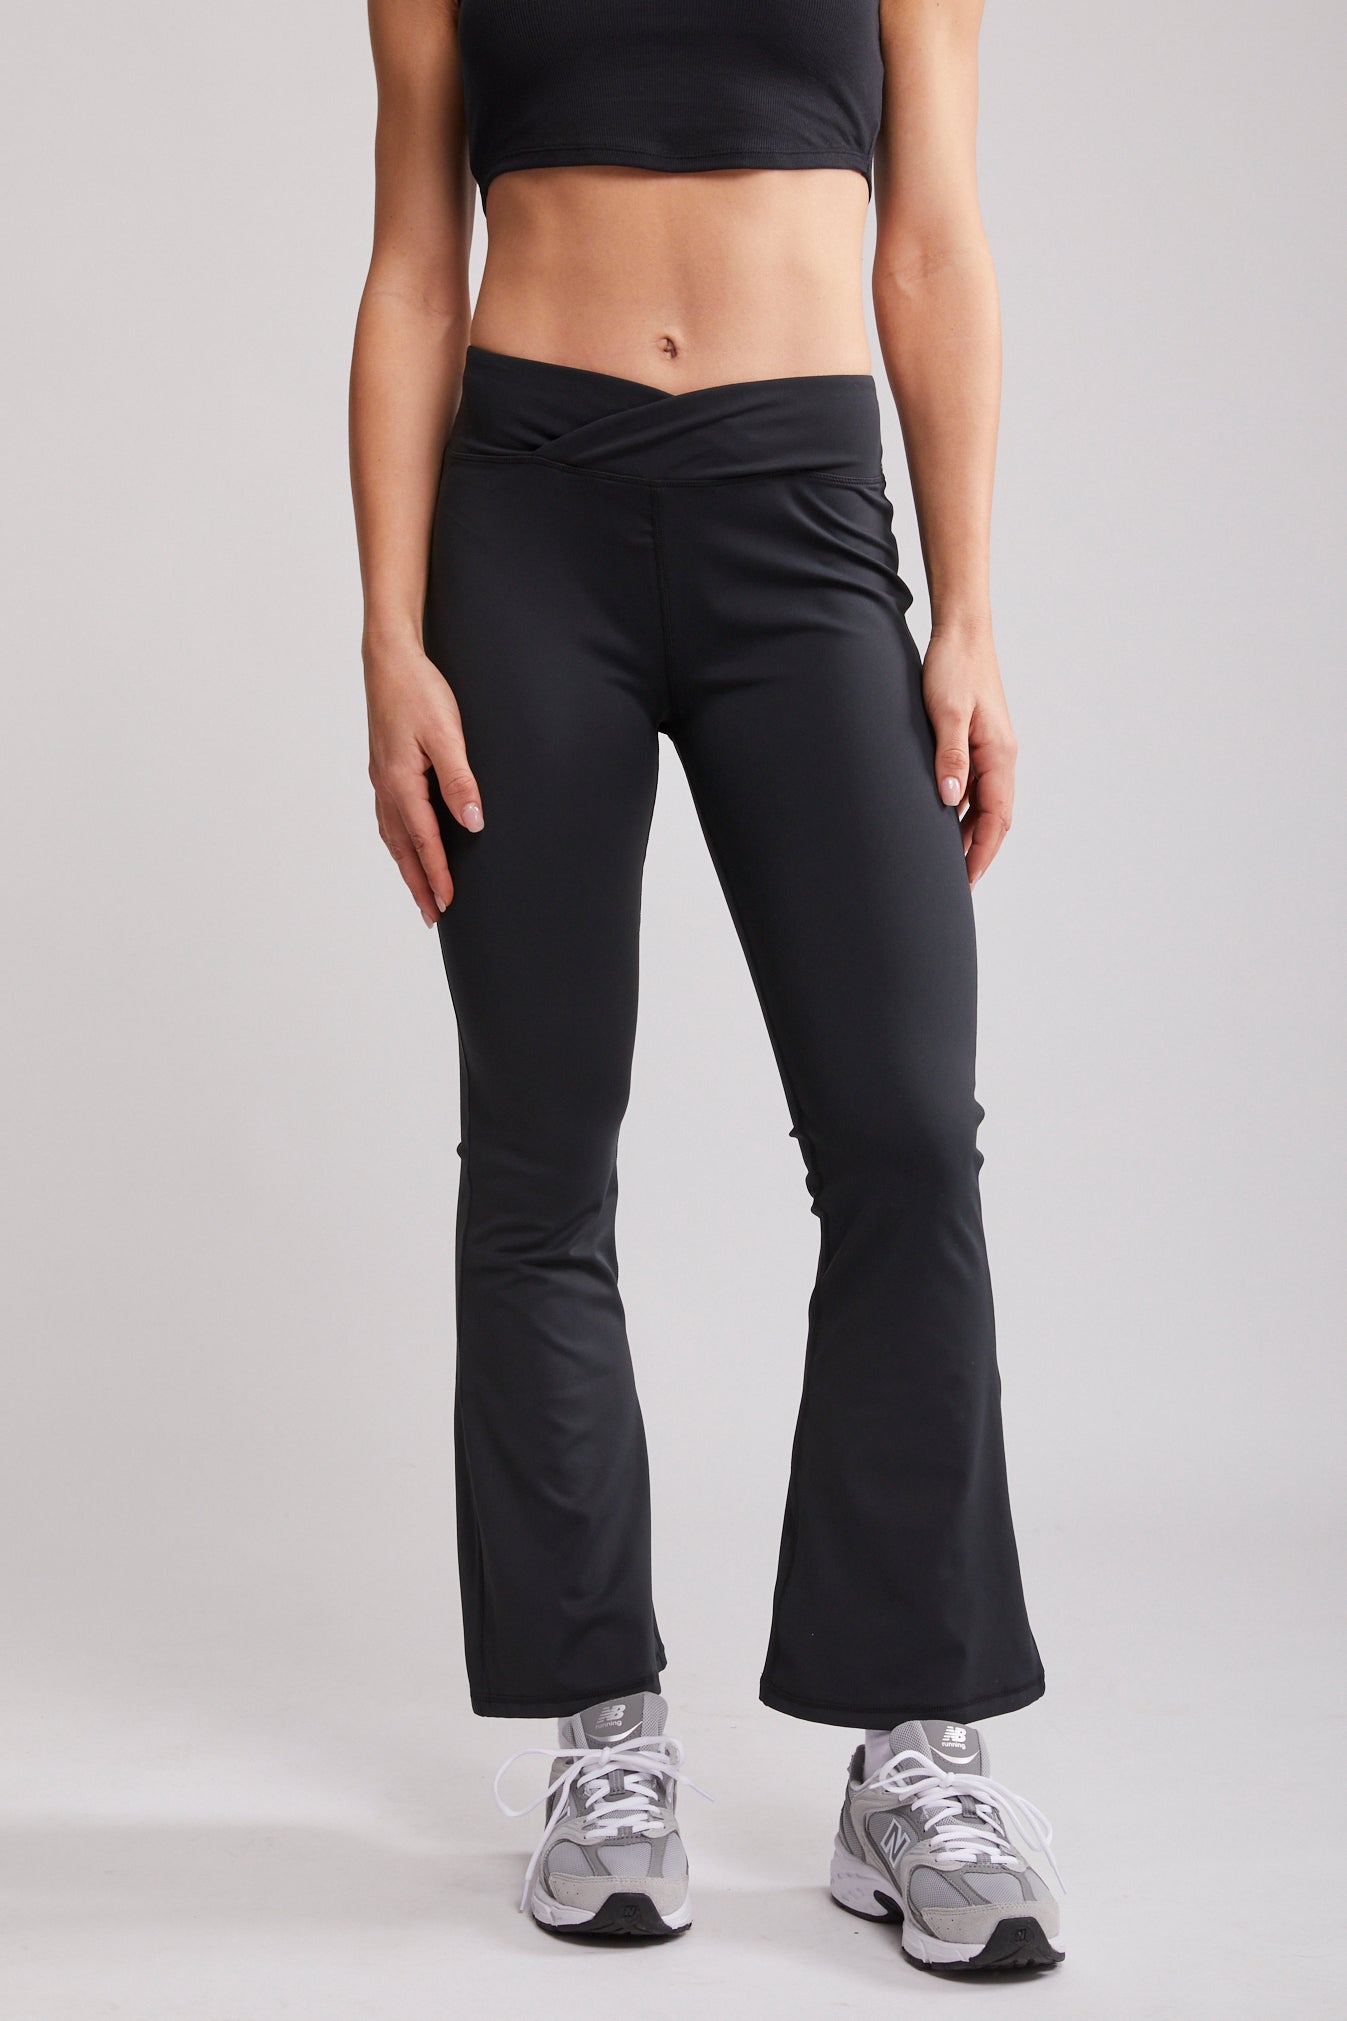 black navy grey Reddit Women's Tight / Yoga Pants / Track Pants at Rs  200/piece in Noida